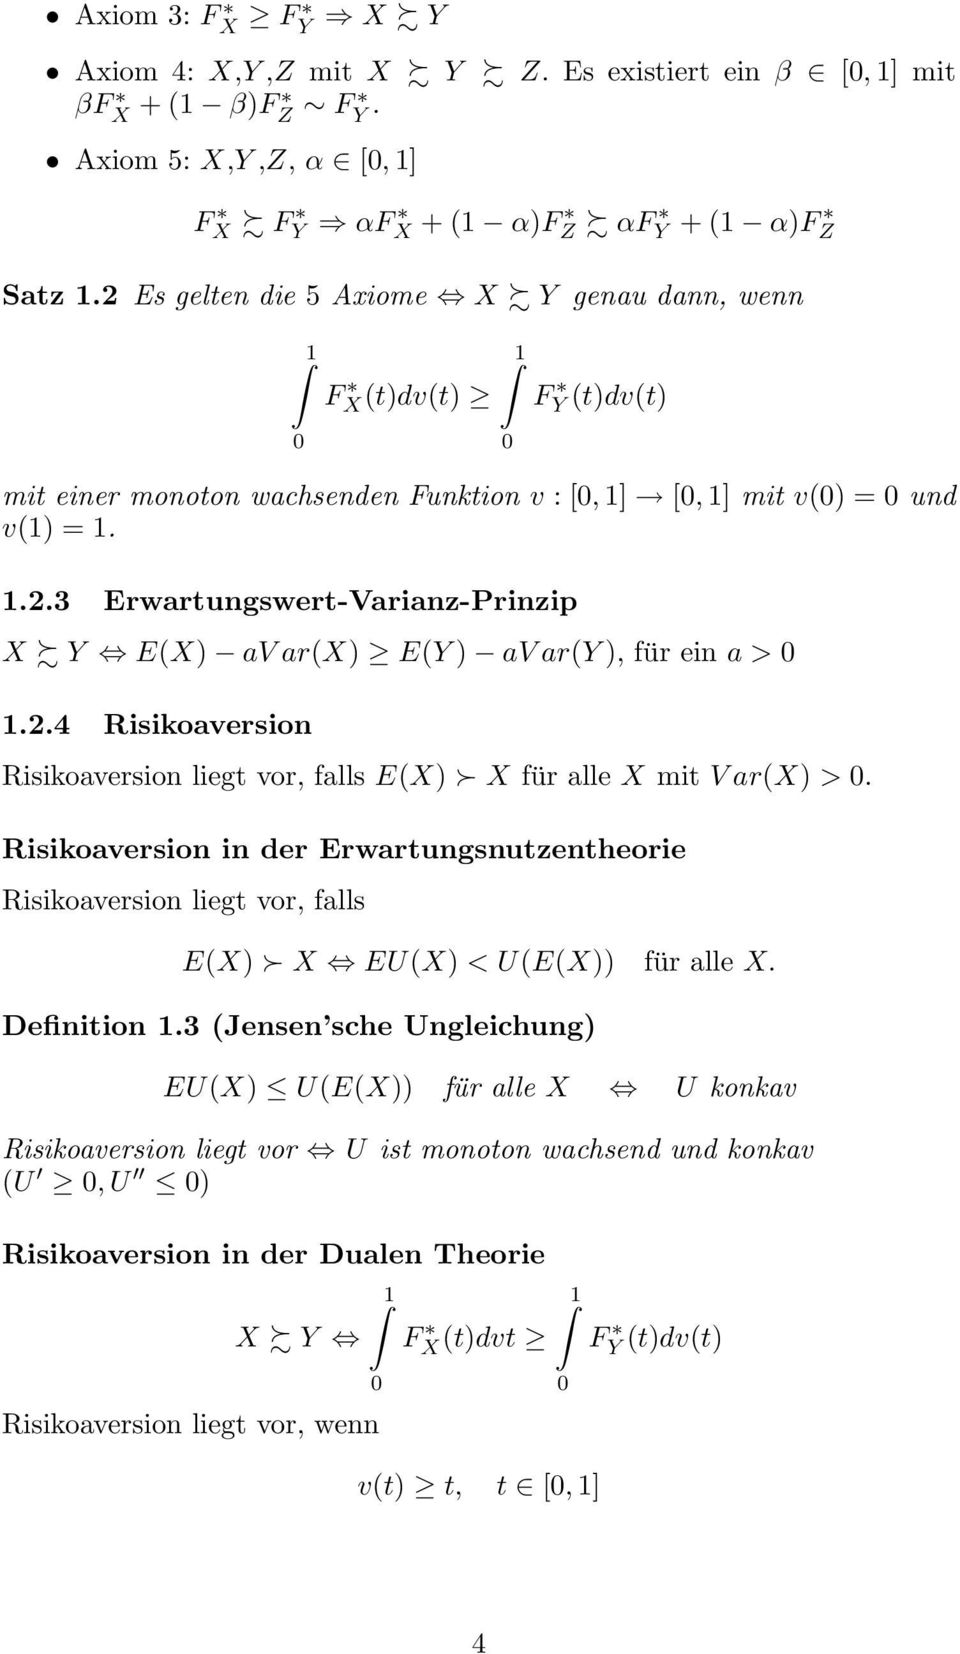 2.4 Risikoaversion Risikoaversion liegt vor, falls E(X) X für alle X mit V ar(x) > 0. Risikoaversion in der Erwartungsnutzentheorie Risikoaversion liegt vor, falls E(X) X EU(X) < U(E(X)) für alle X.